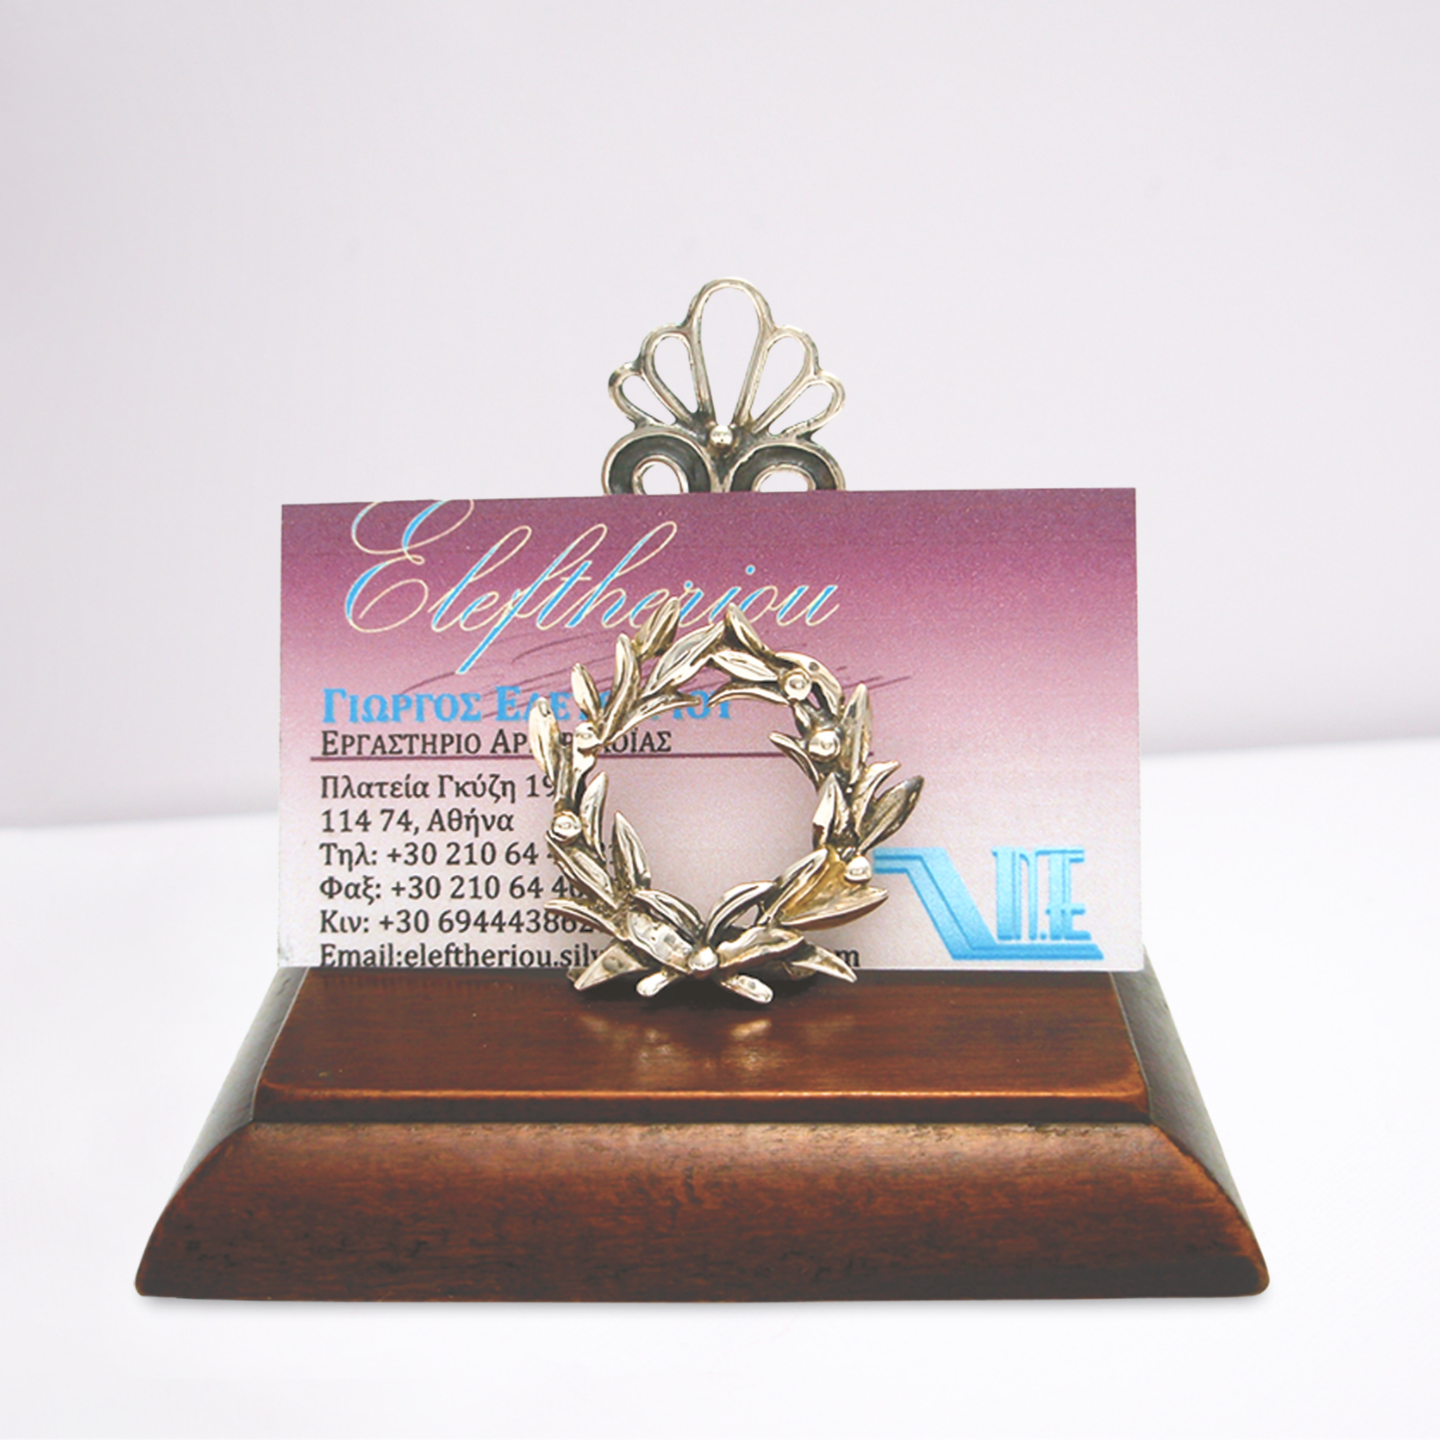 Kotinos Wreath Greek Desk business card holder display in sterling silver (A-25-4)